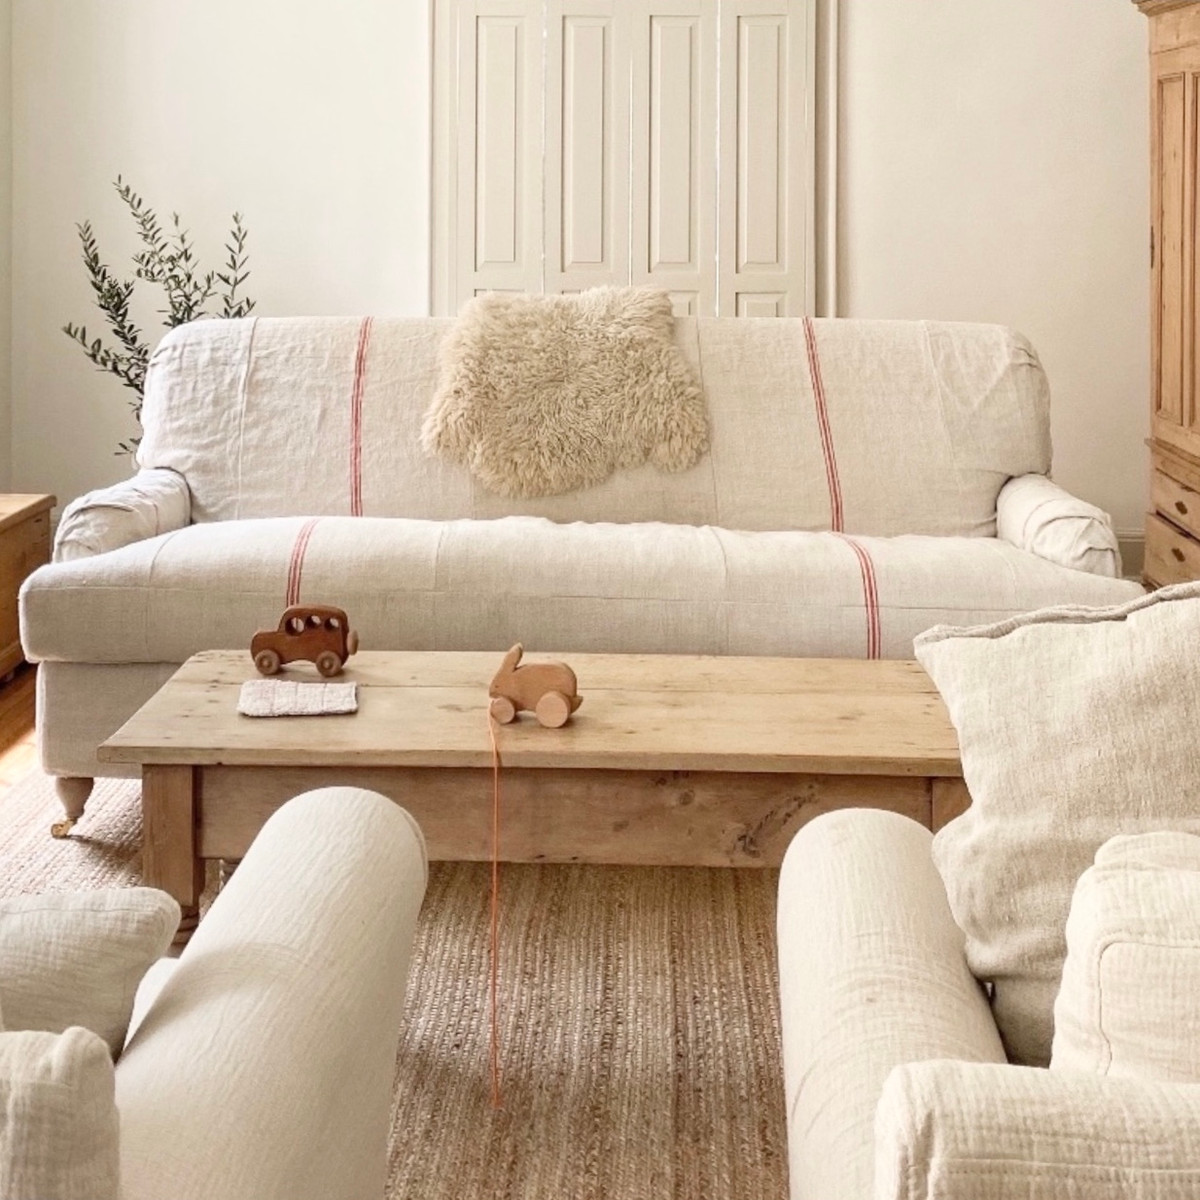 English Roll Arm Sofa in French Grain sack by English Farmhouse Furniture